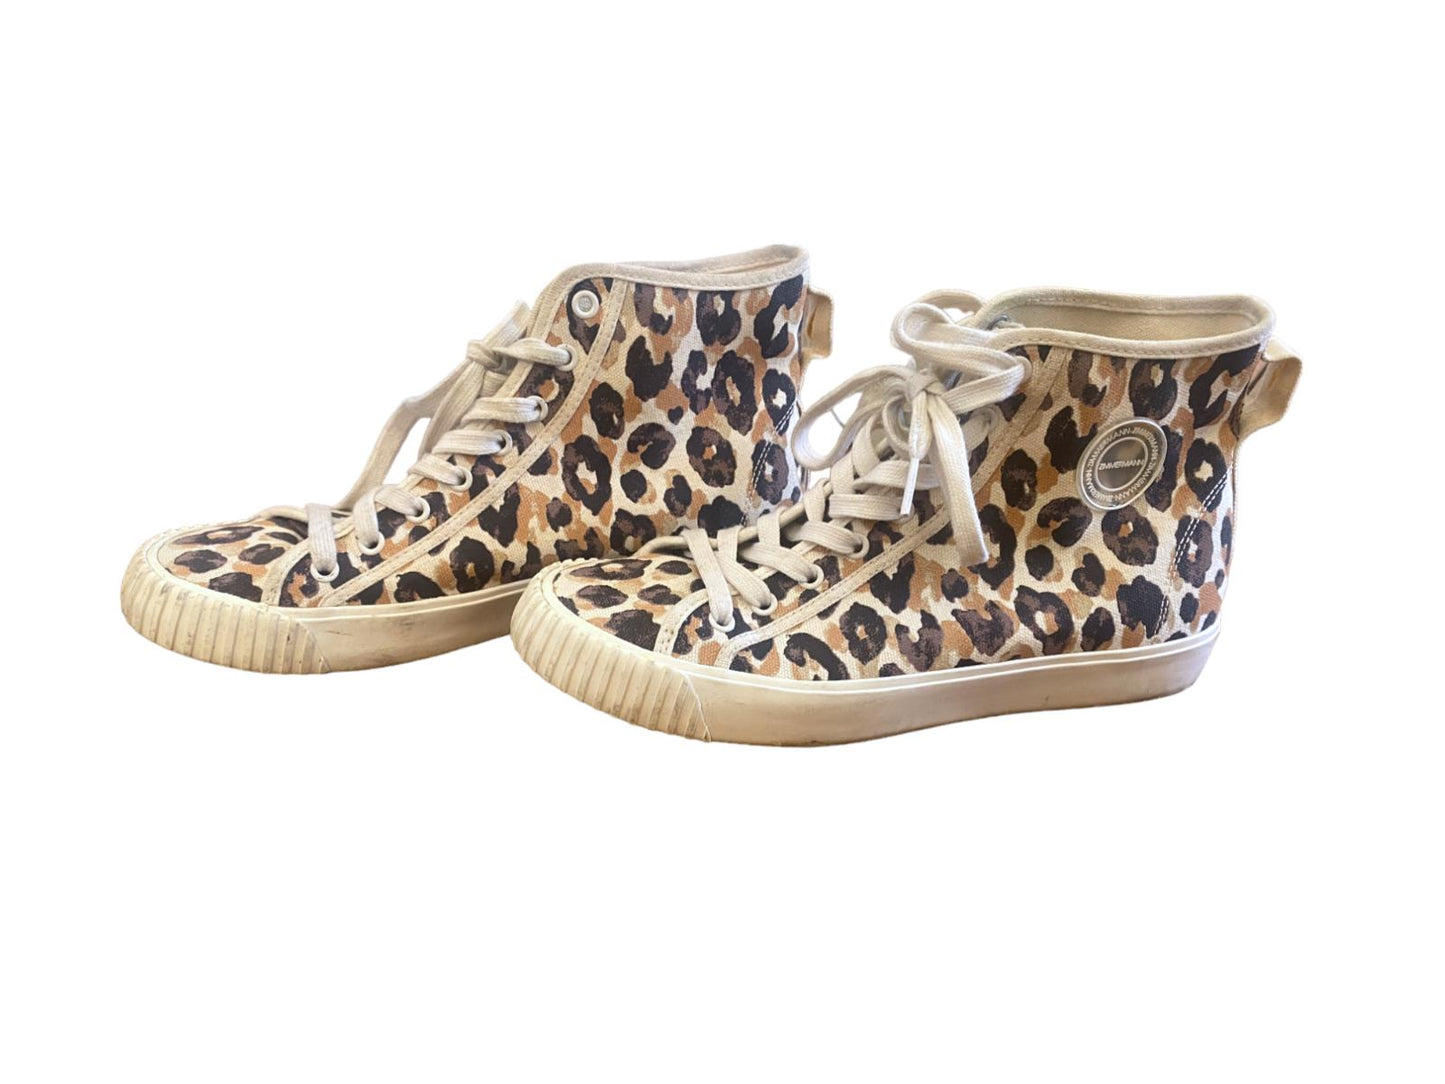 Zimmermann Canvas Leopard Print Trainers | High Top Sneakers, Sz 41, White/Beige